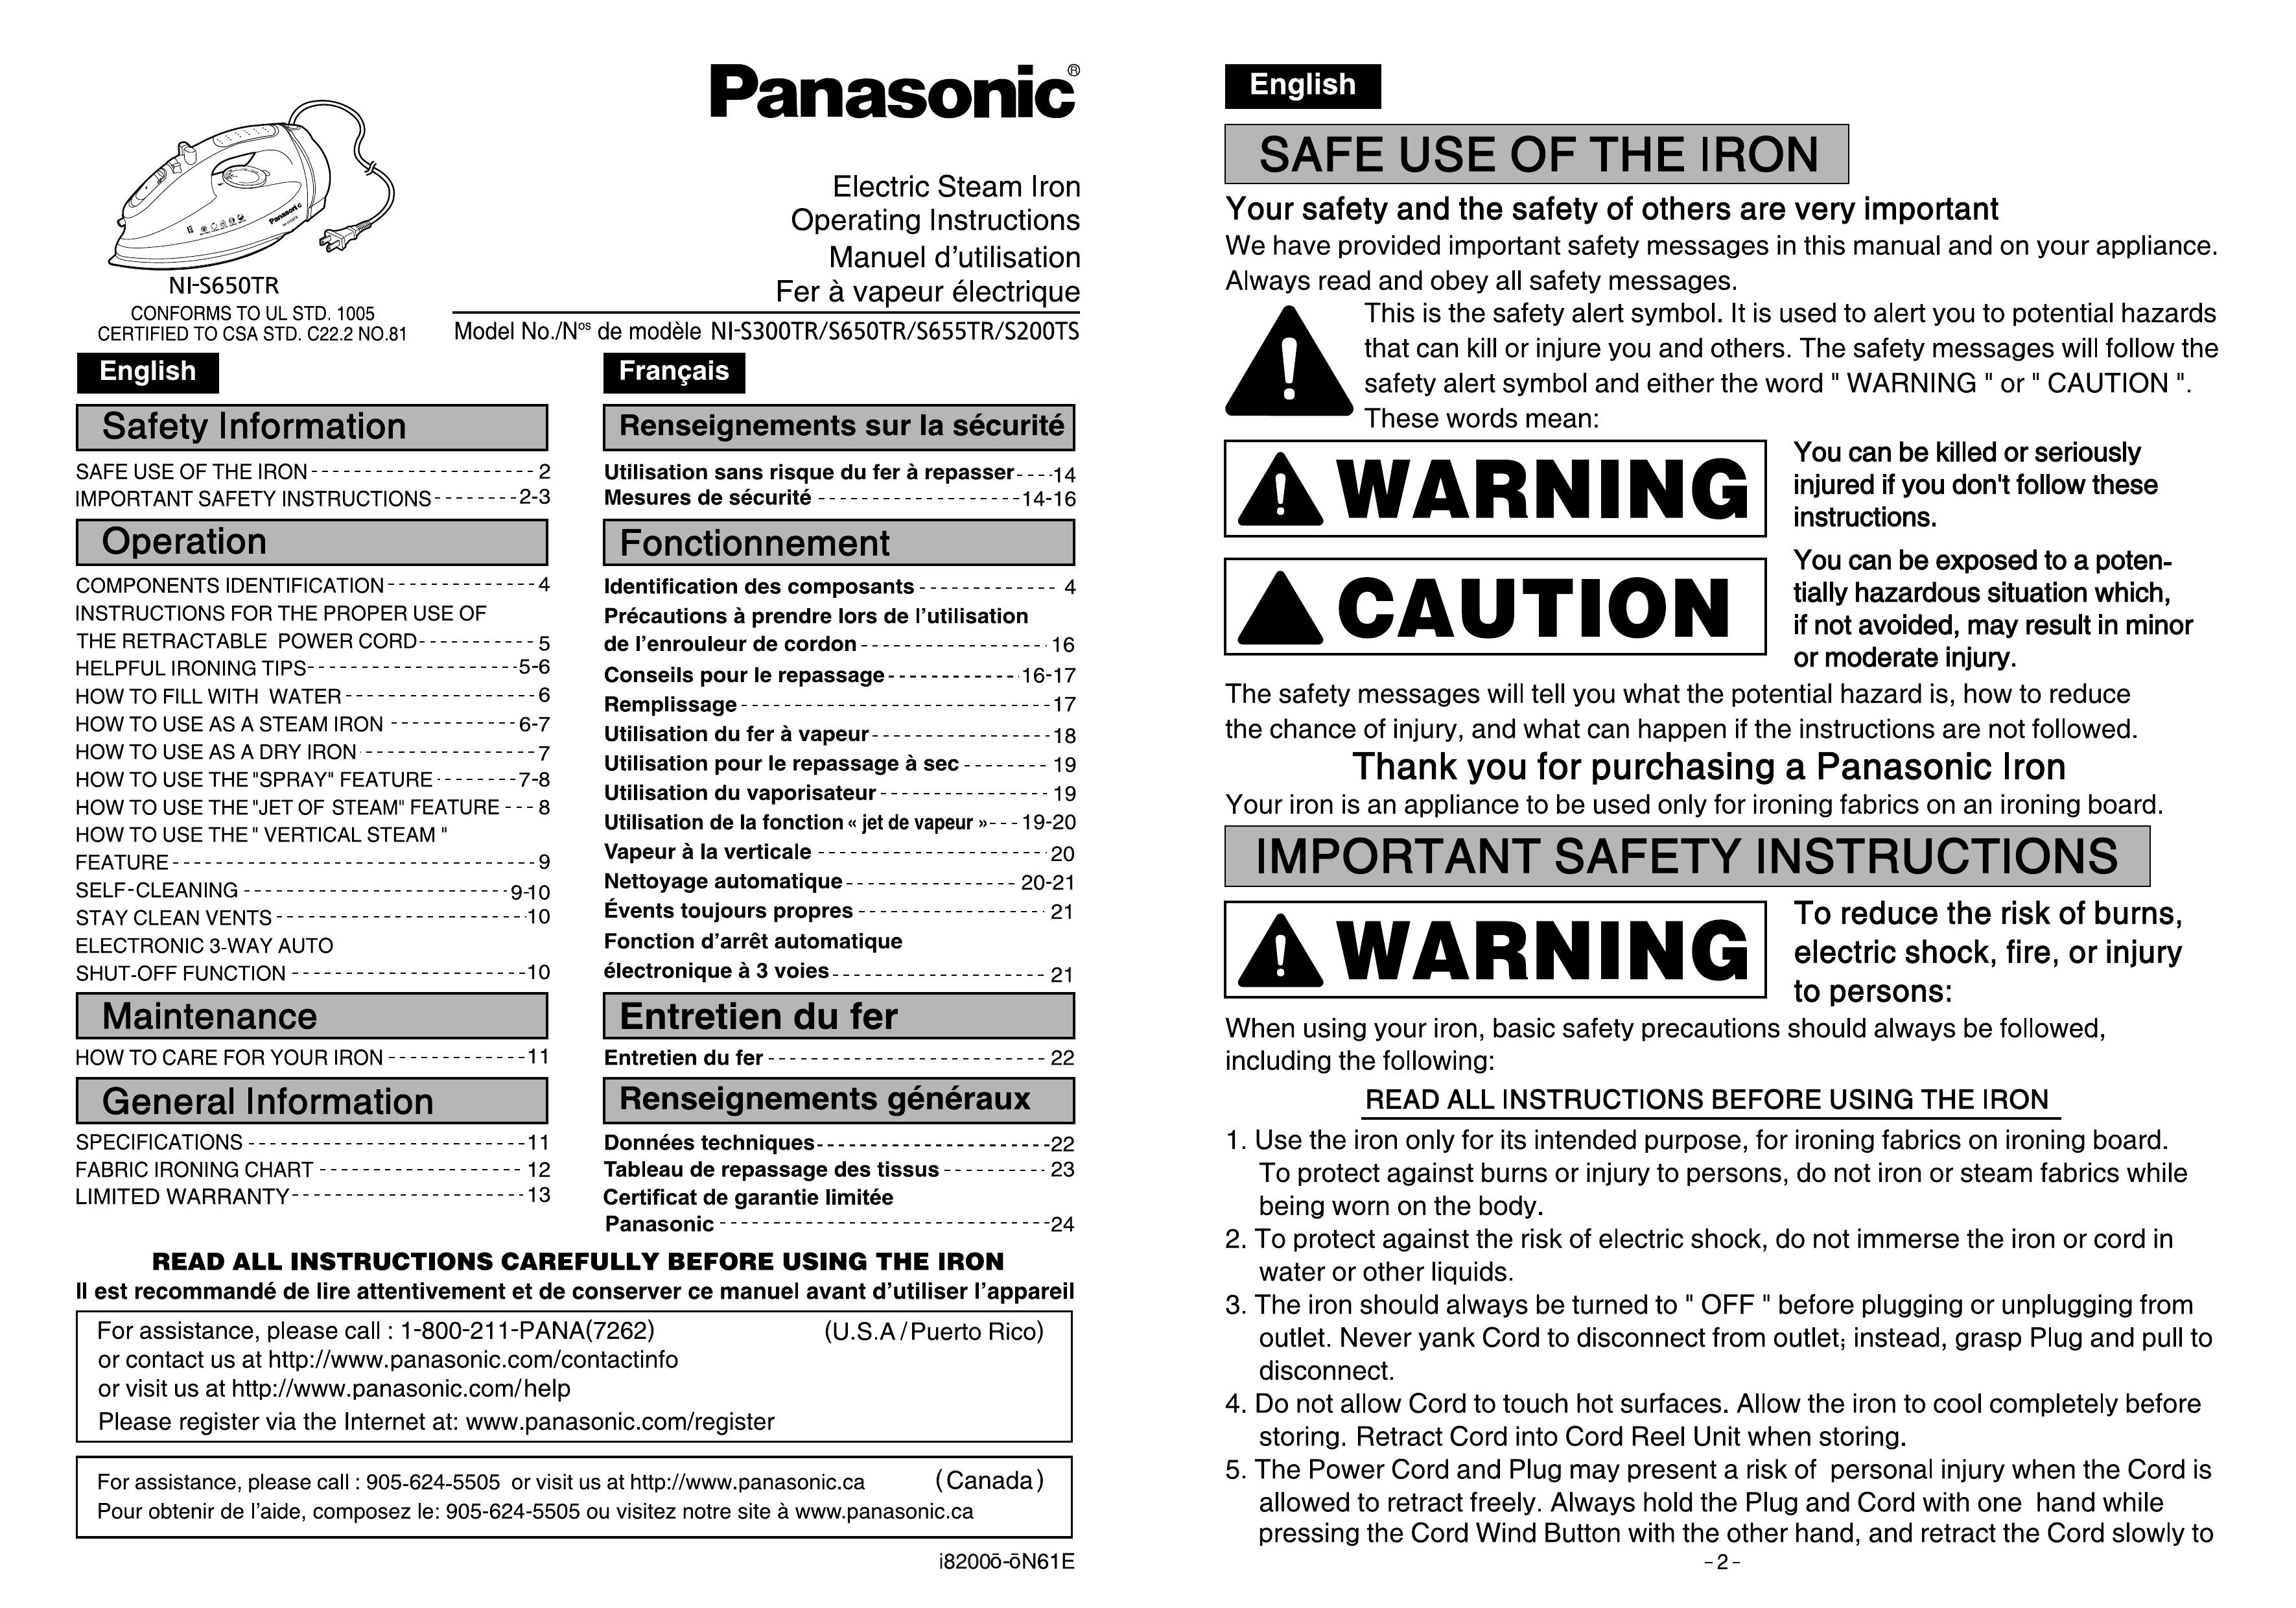 Panasonic NI-S650TR Iron User Manual